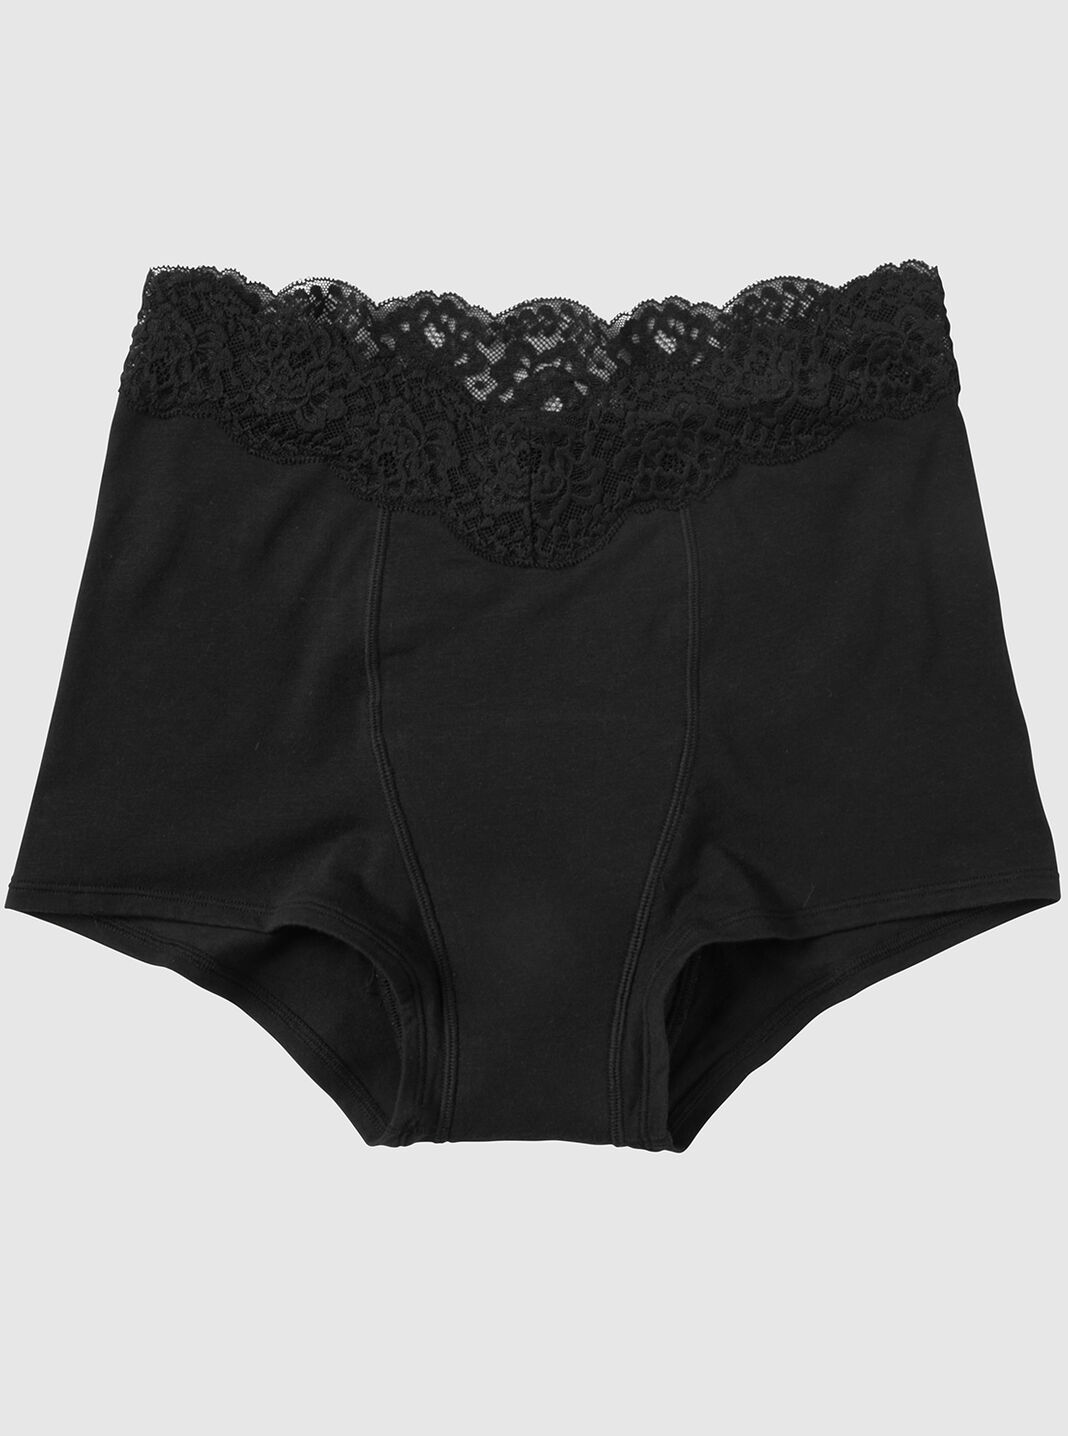 OLIKEME Menstrual Period Underwear for Women Mid Waist Cotton